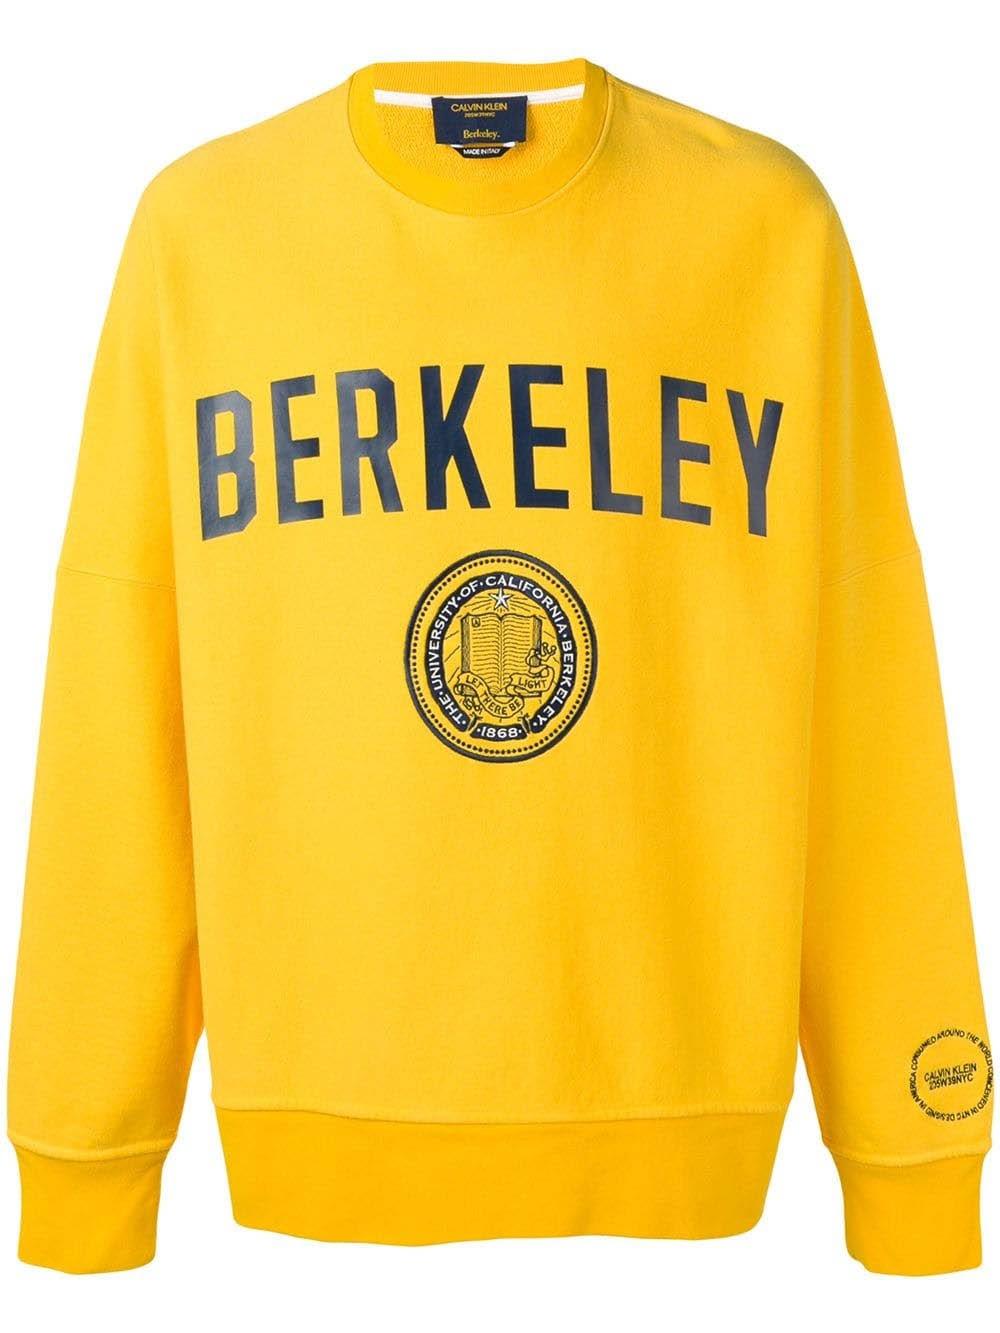 CALVIN KLEIN 205W39NYC Cotton 'berkeley' Printed Sweatshirt in Yellow for  Men - Lyst